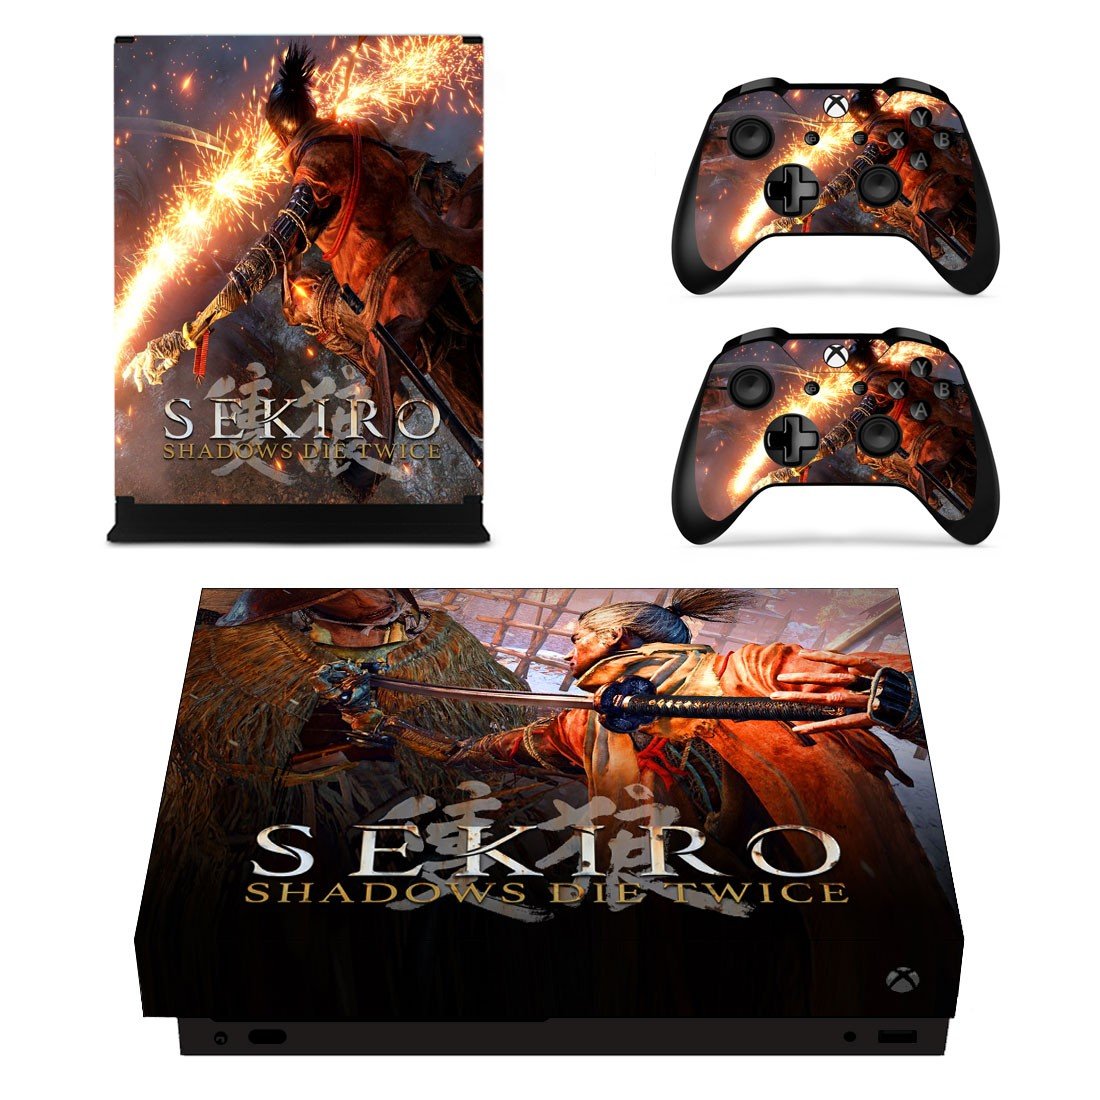 Sekiro Shadows Die Twice Skin Sticker Decal for Xbox One X Controllers